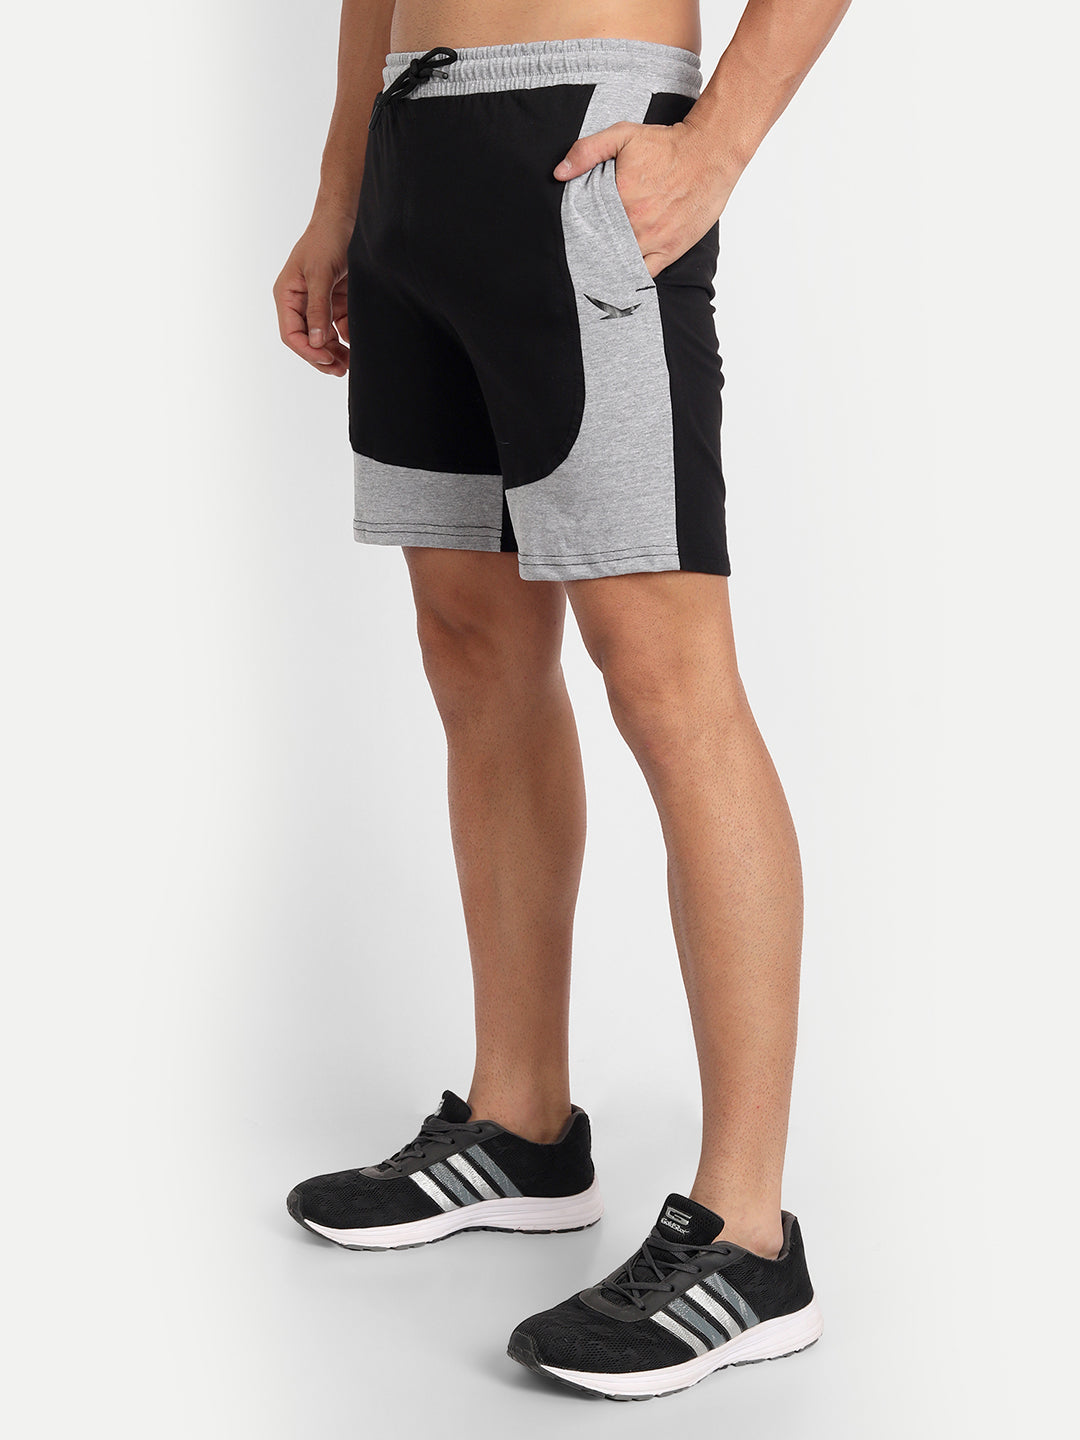 HiFlyers Men Black-Grey Knitted Sports Shorts